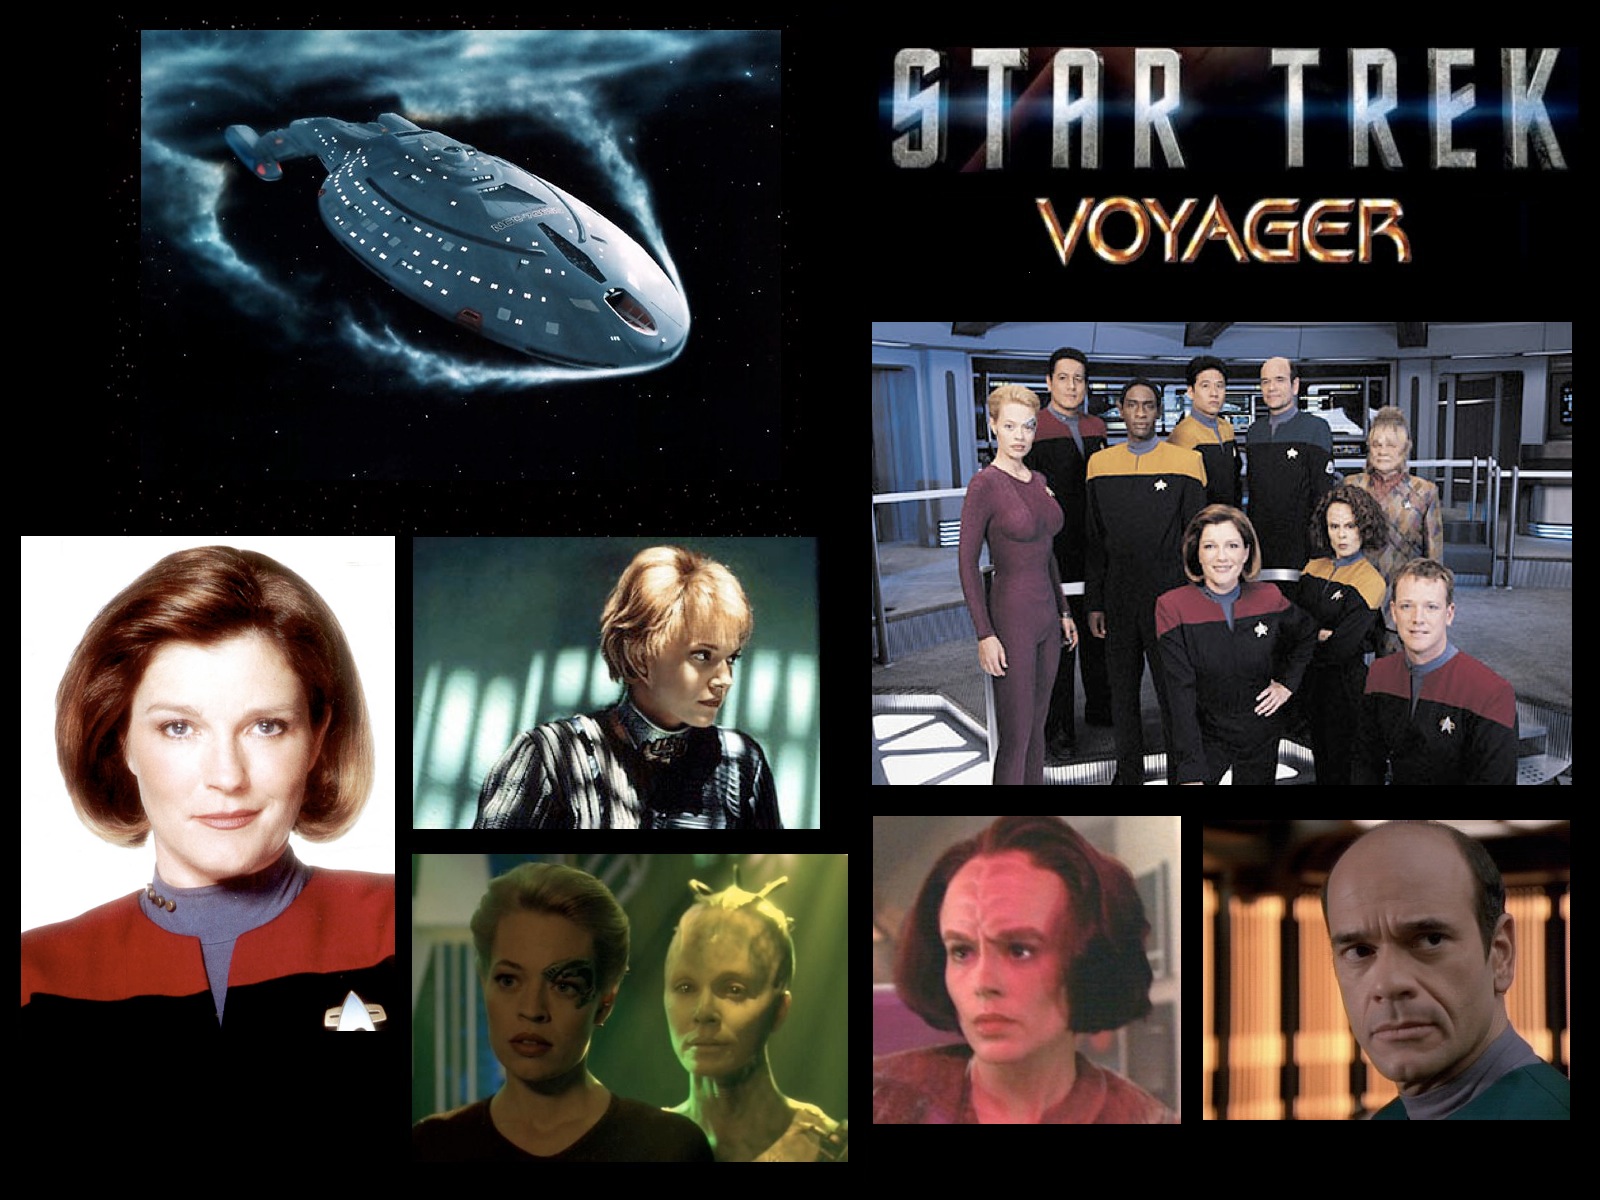 voyager wallpaper - Star Trek Voyager Wallpaper (23850344) - Fanpop